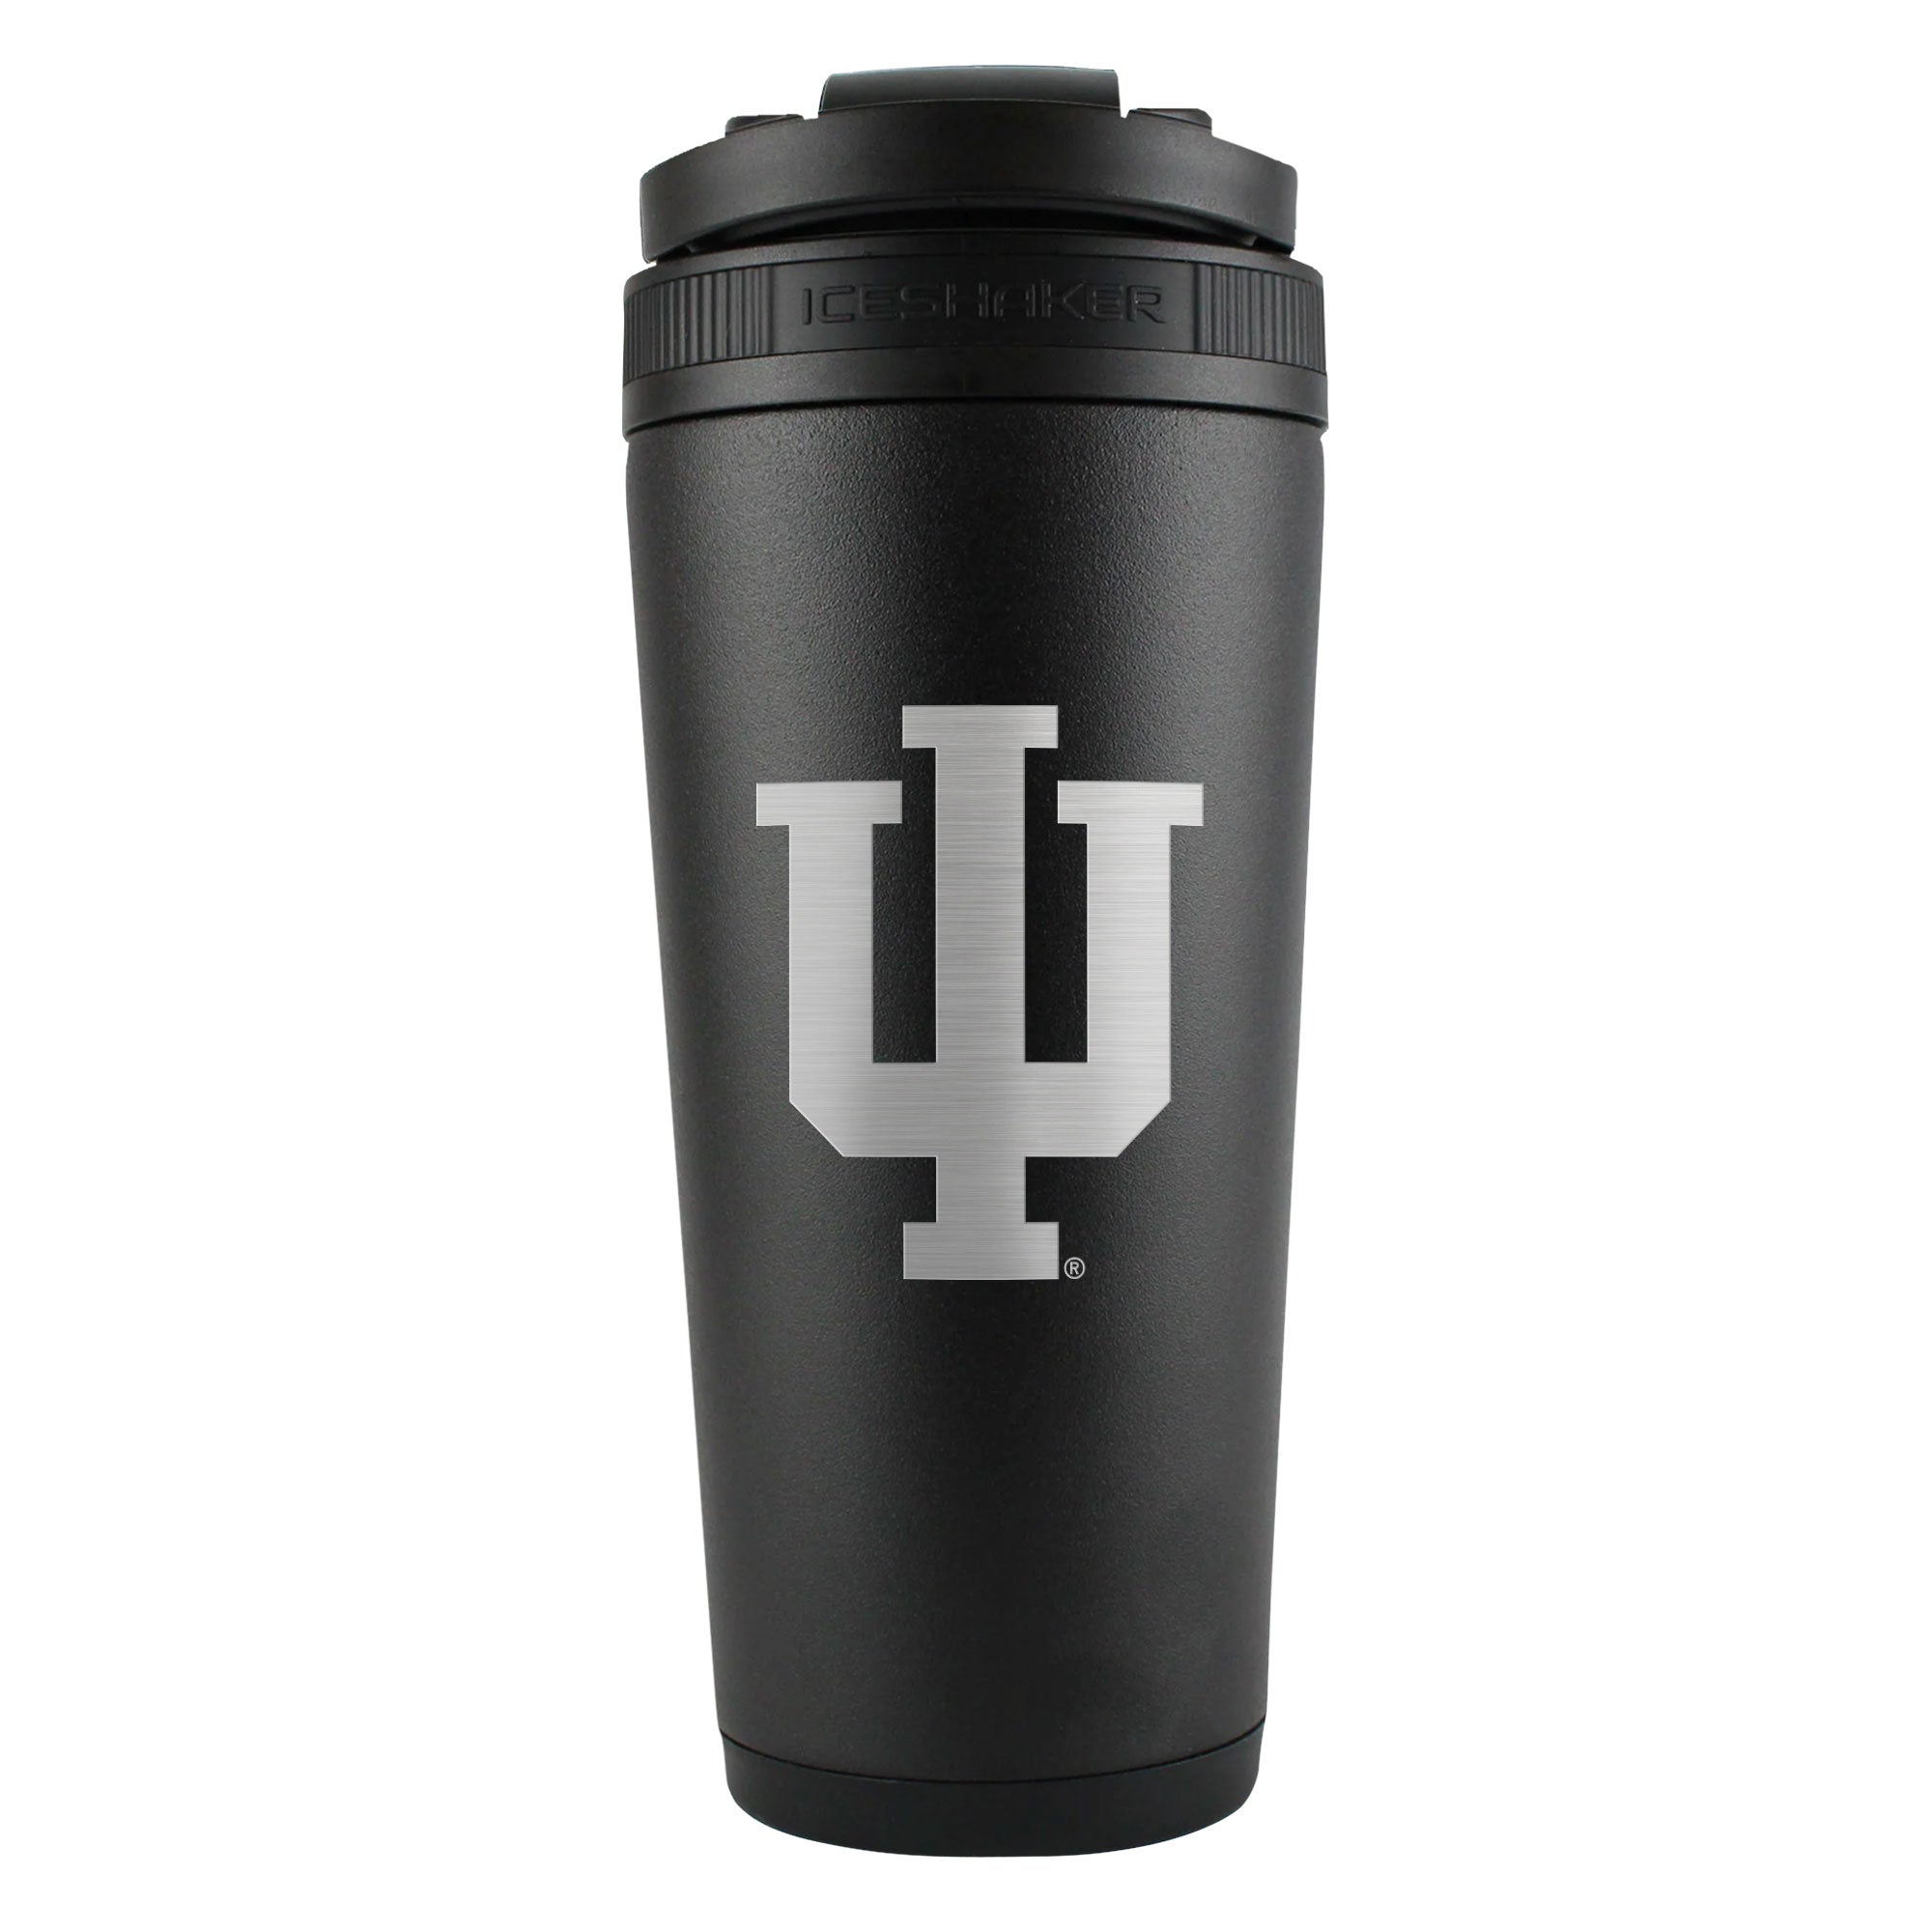 Officially Licensed Indiana University 26oz Ice Shaker - Black